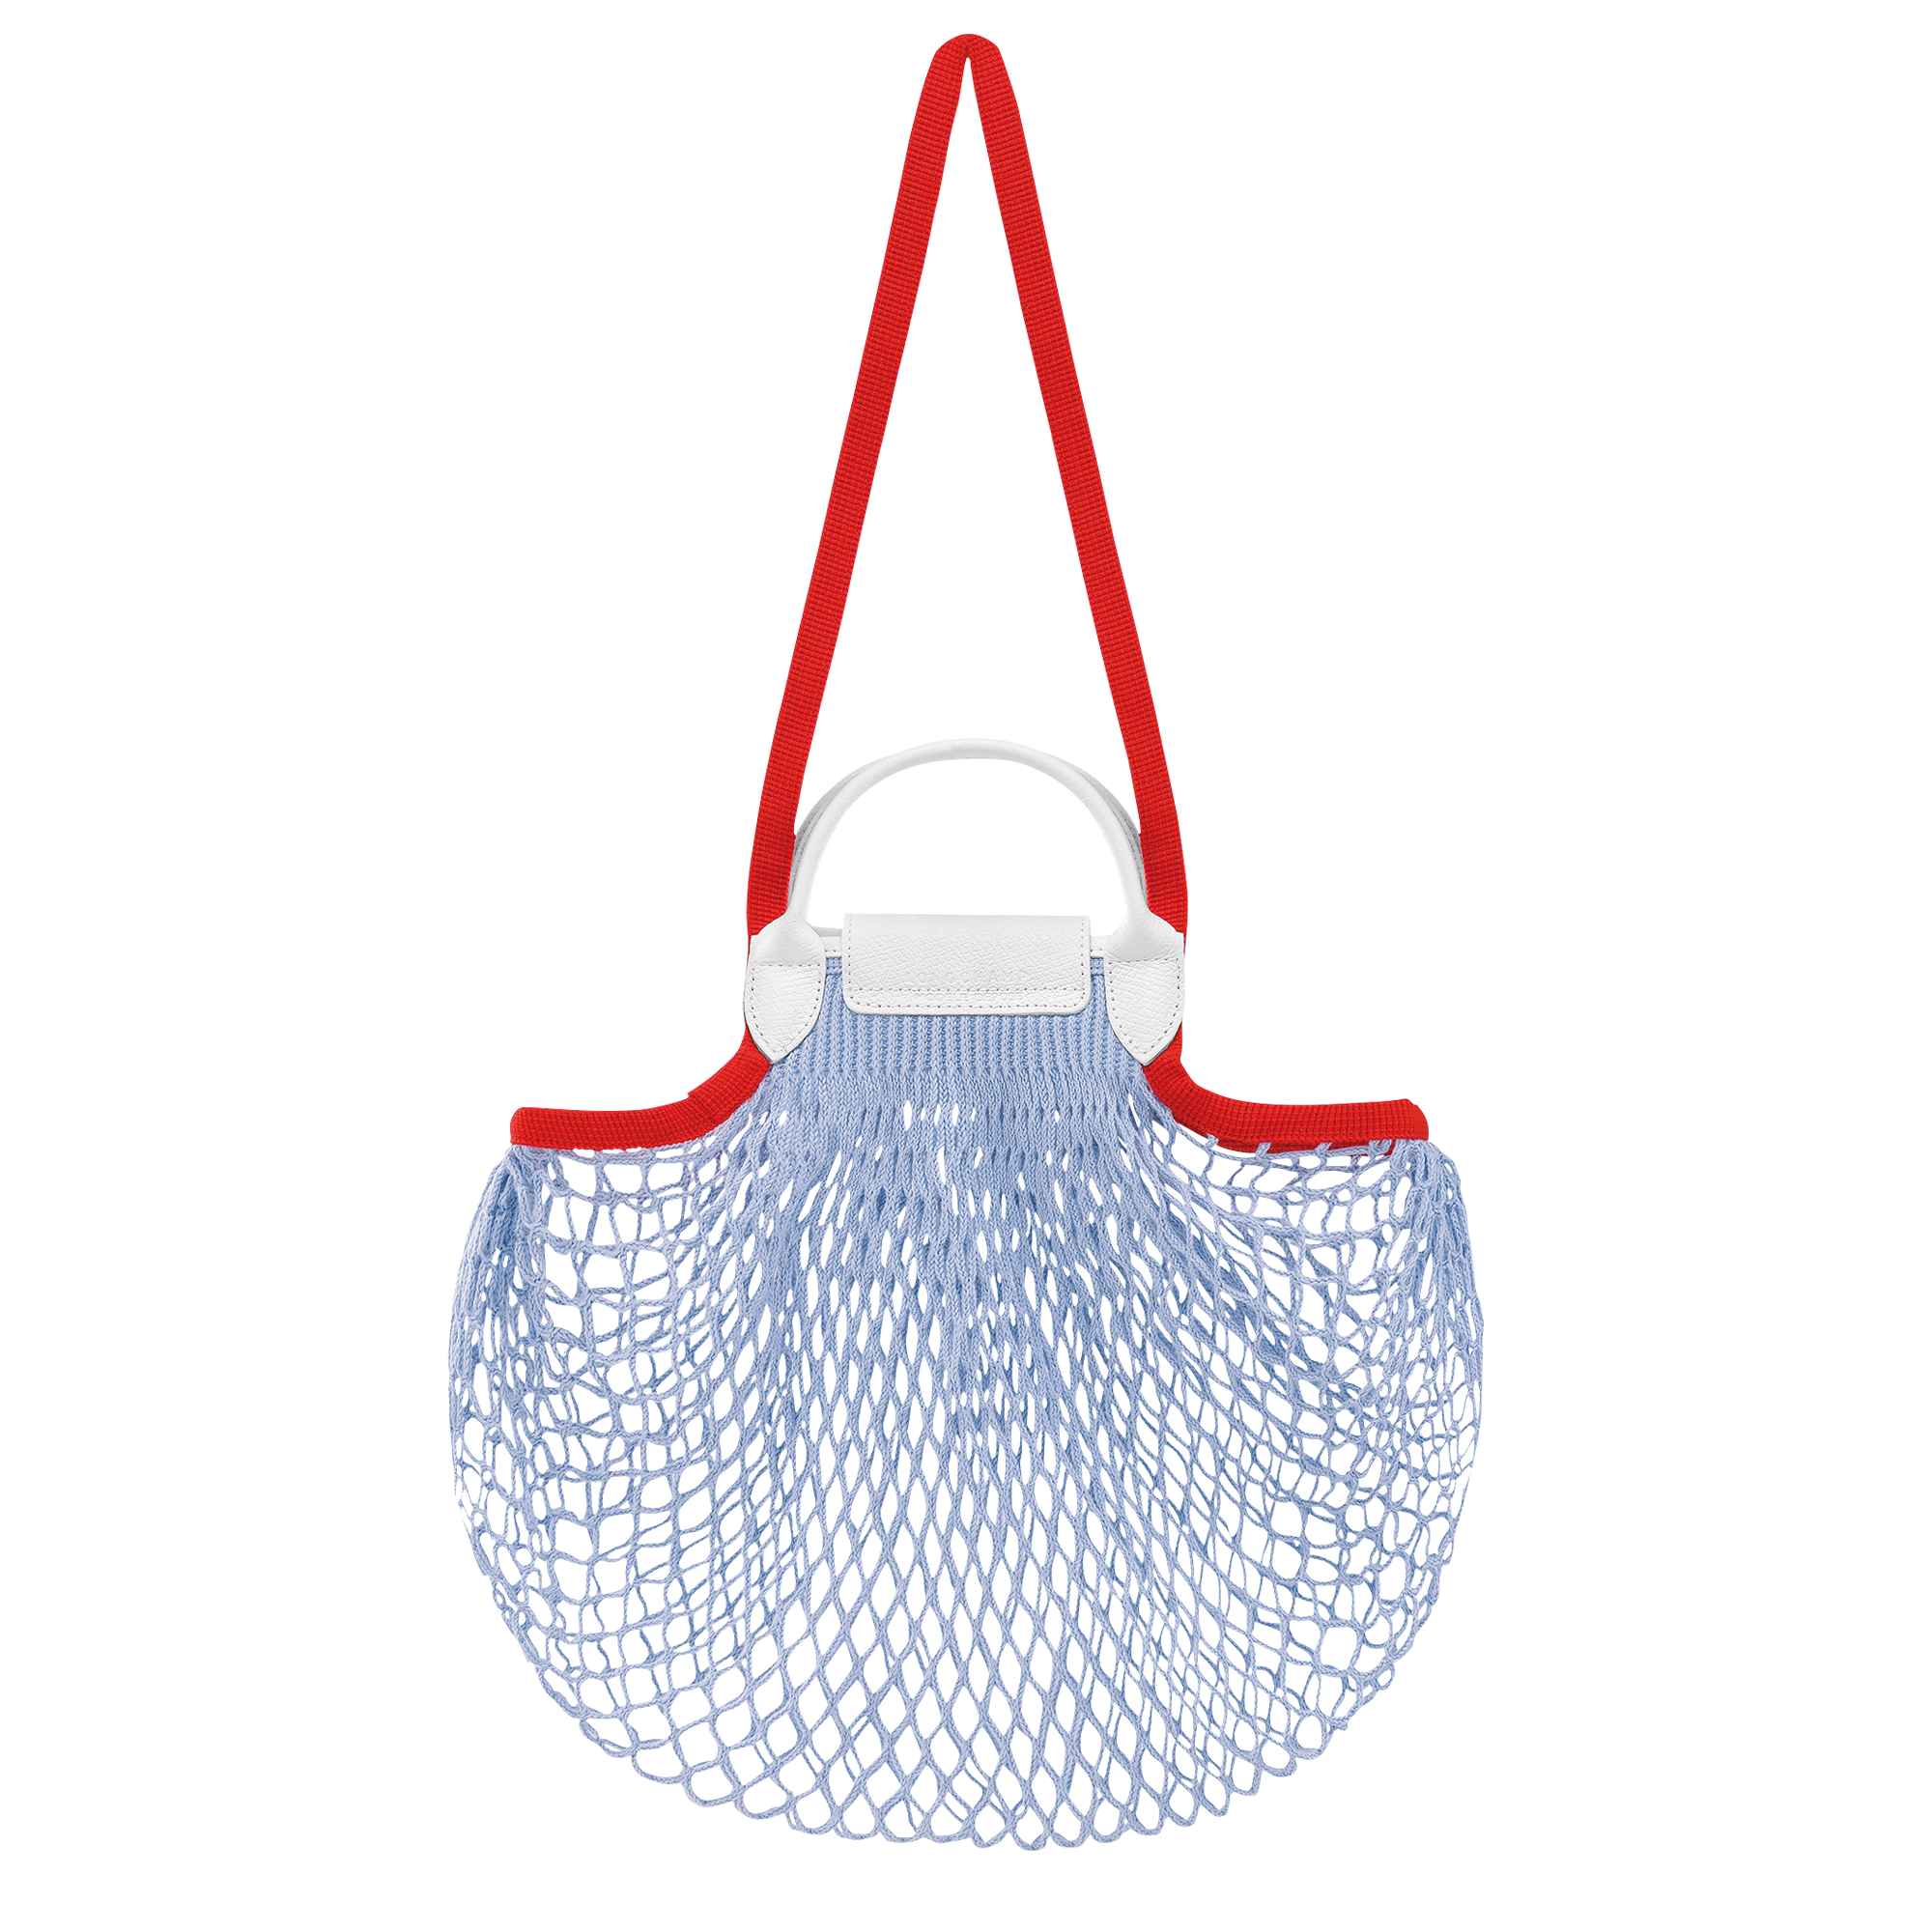 Filt French Market Net Bag Red White Blue - Made in France